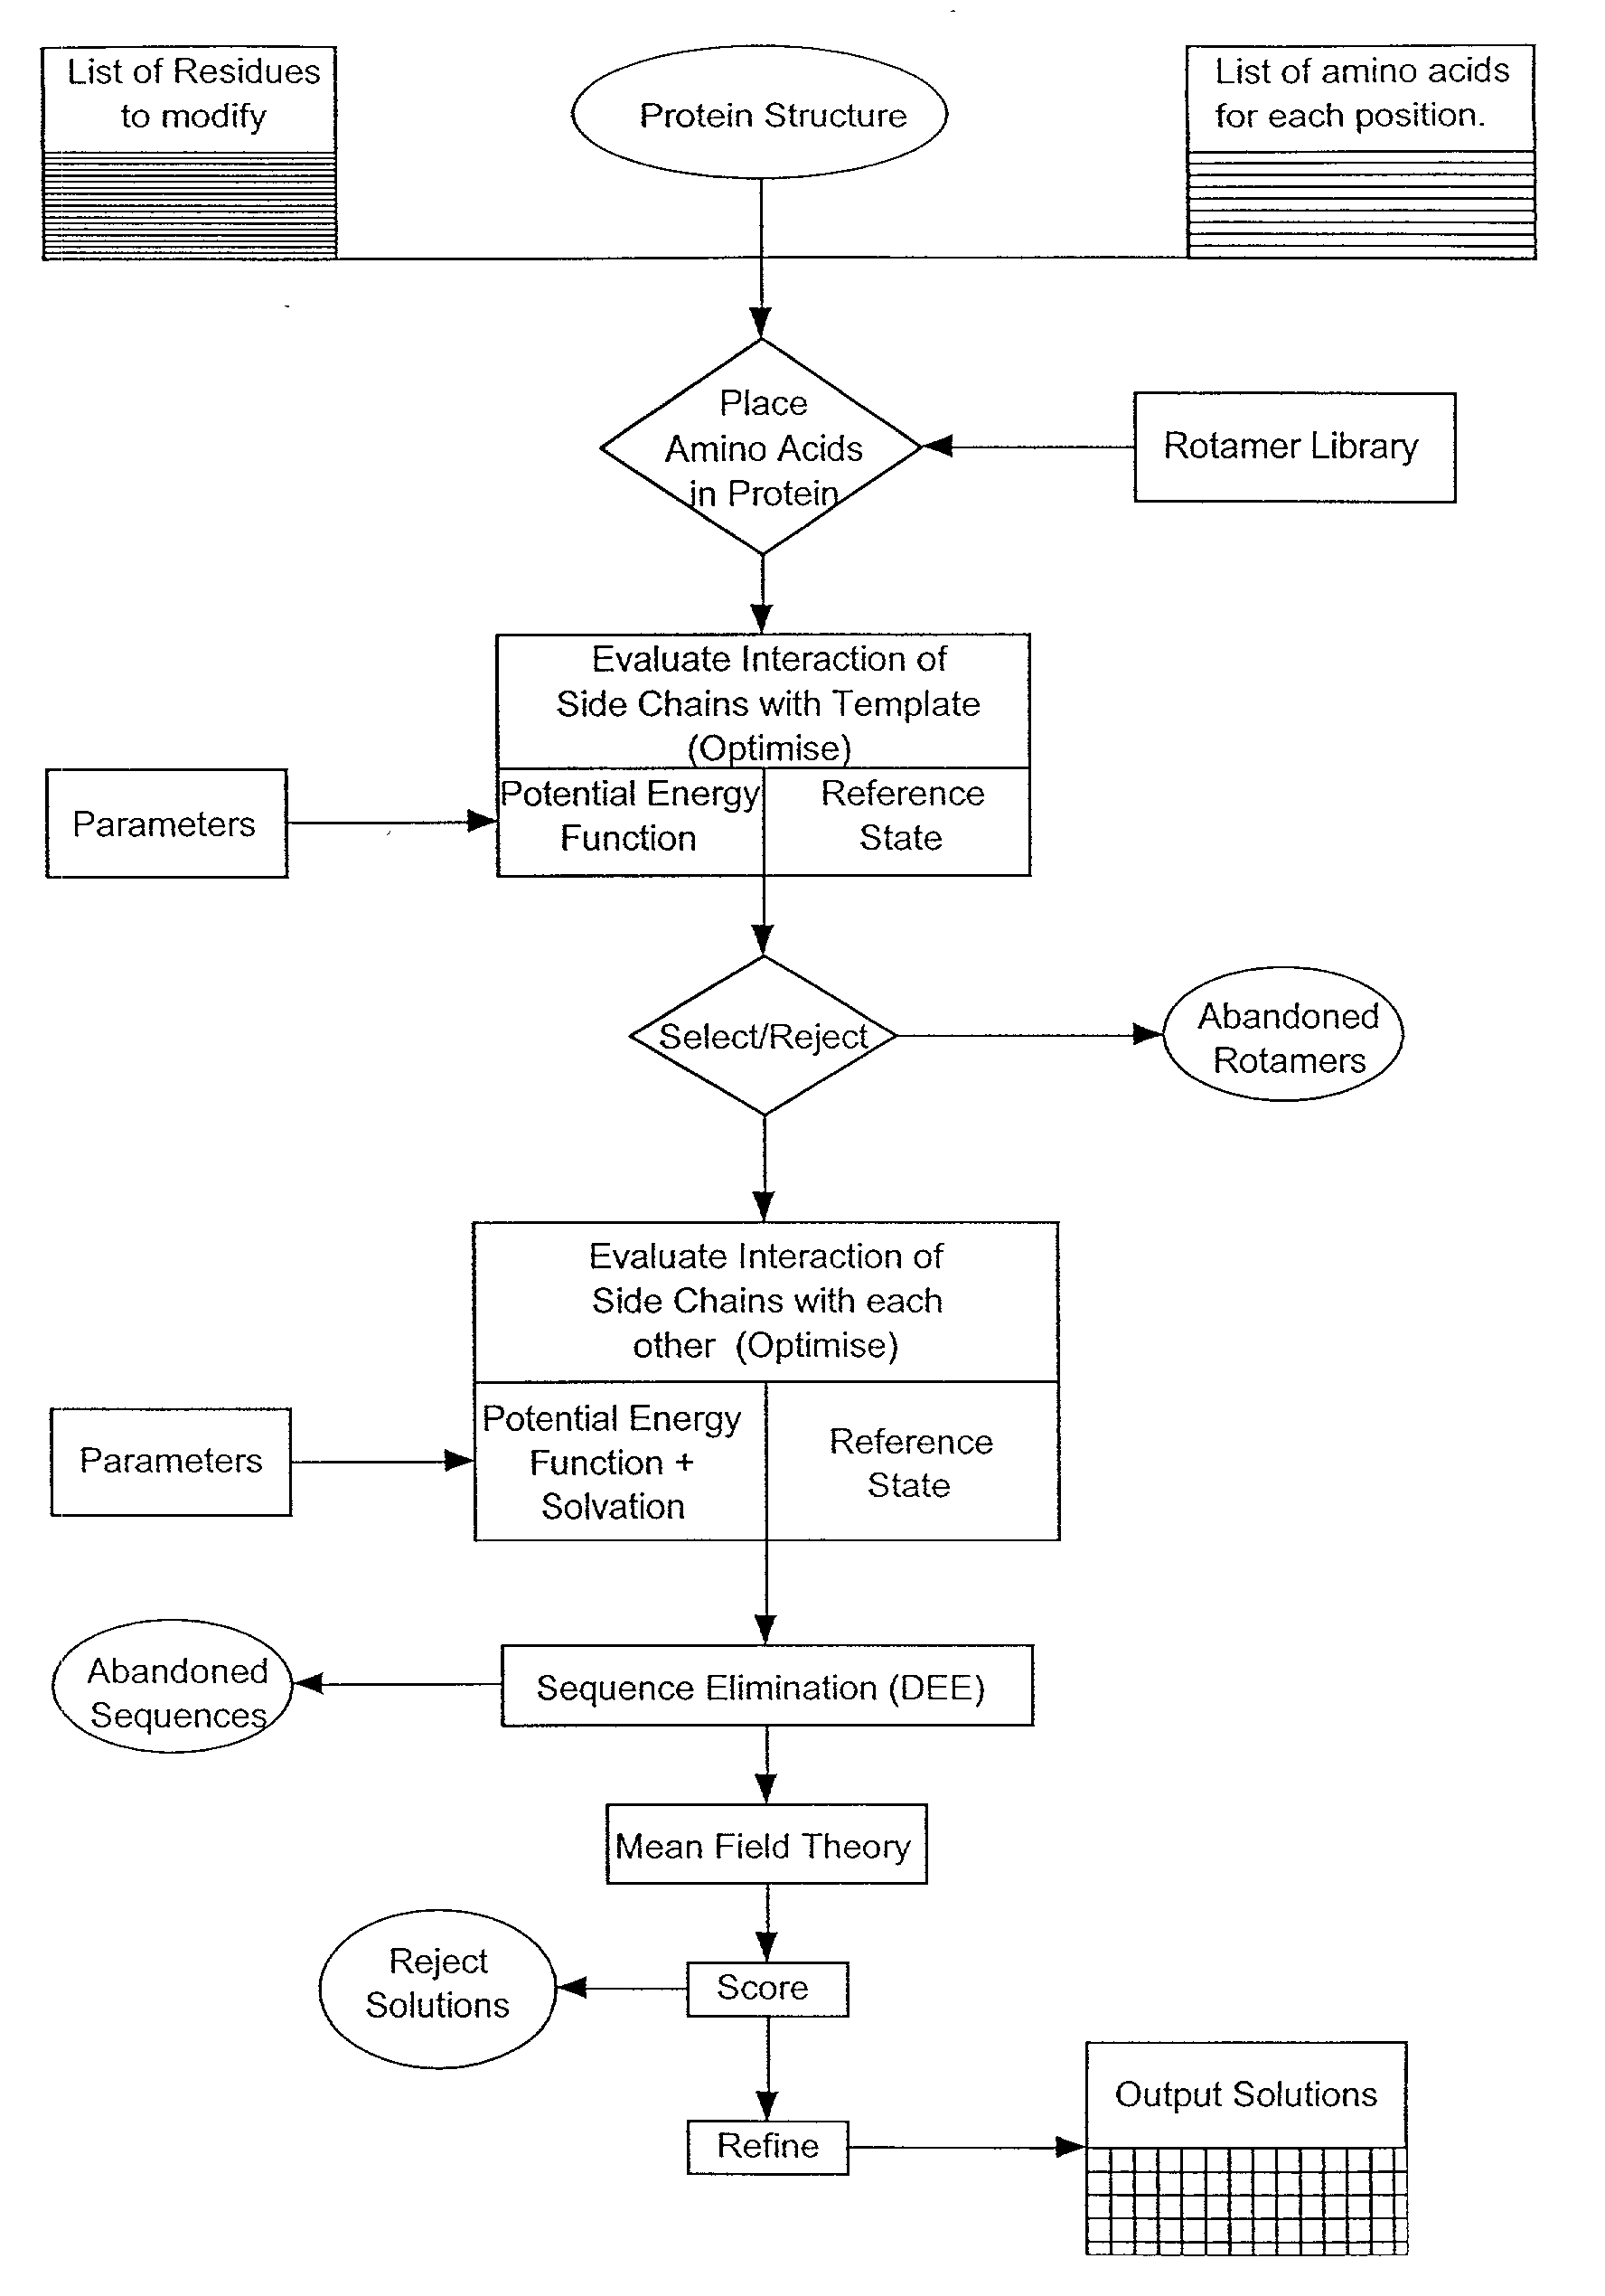 Computer-based method for macromolecular engineering and design